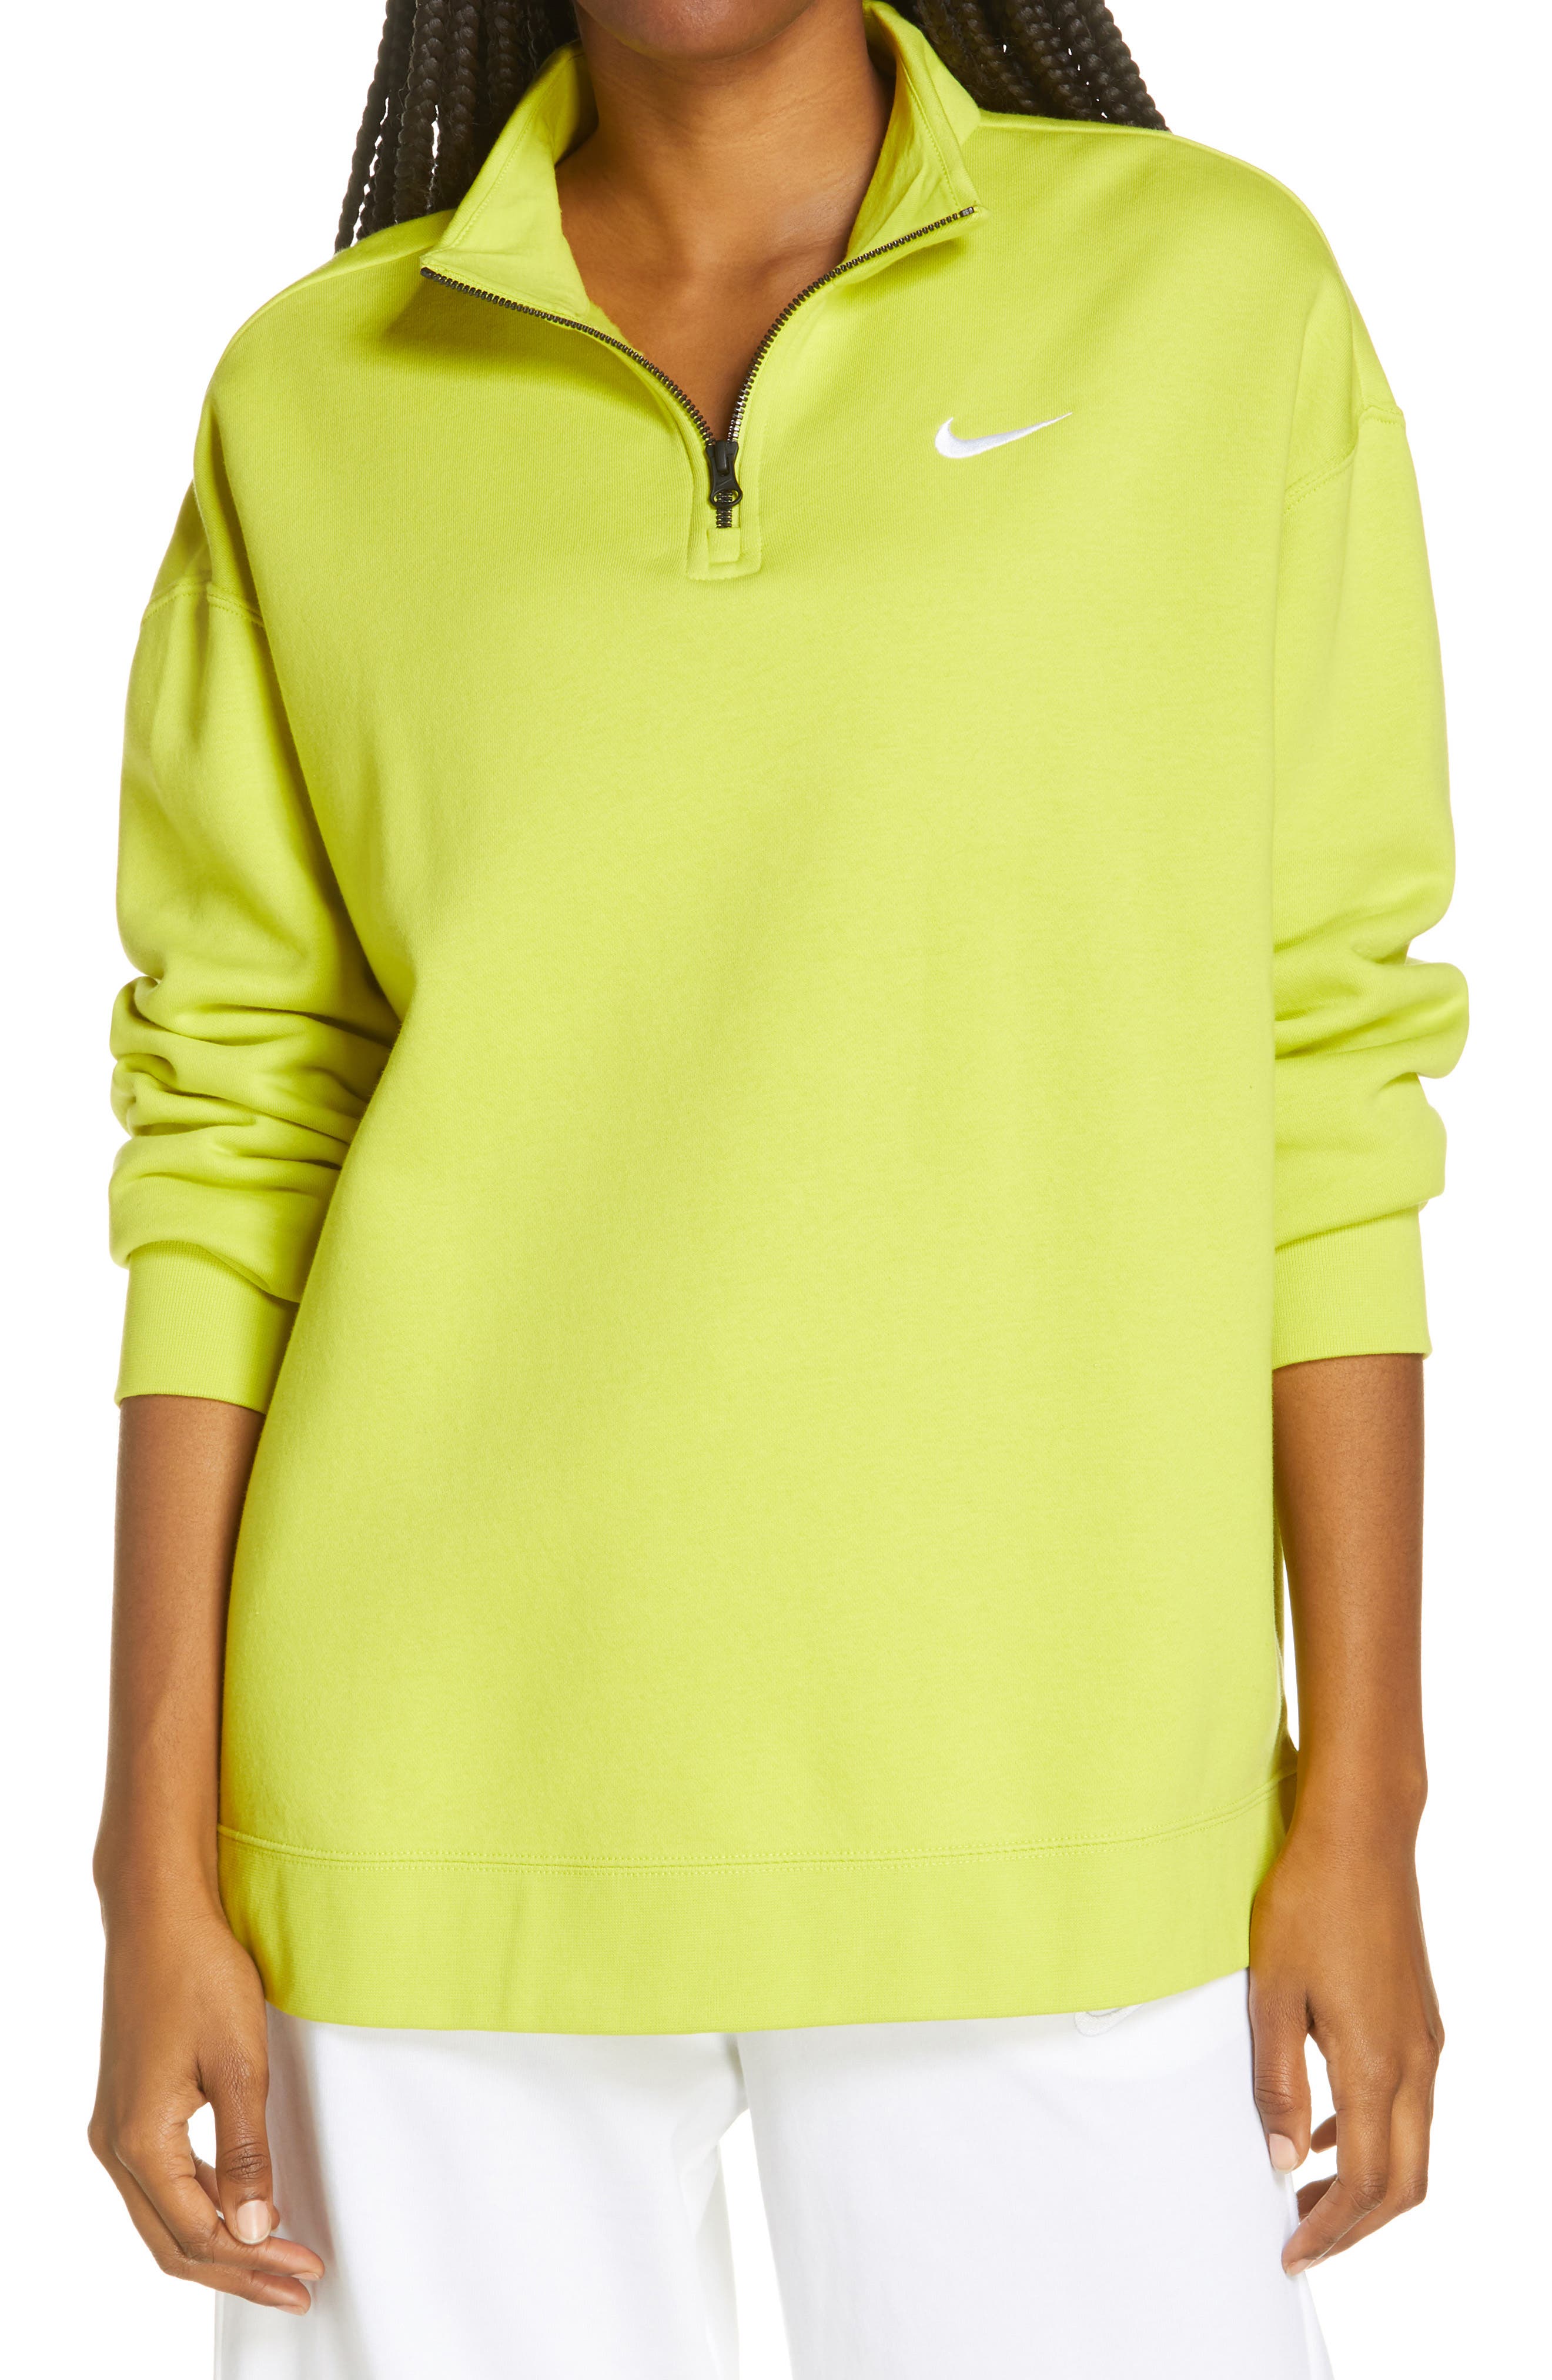 Women's Yellow Nike Clothing | Nordstrom